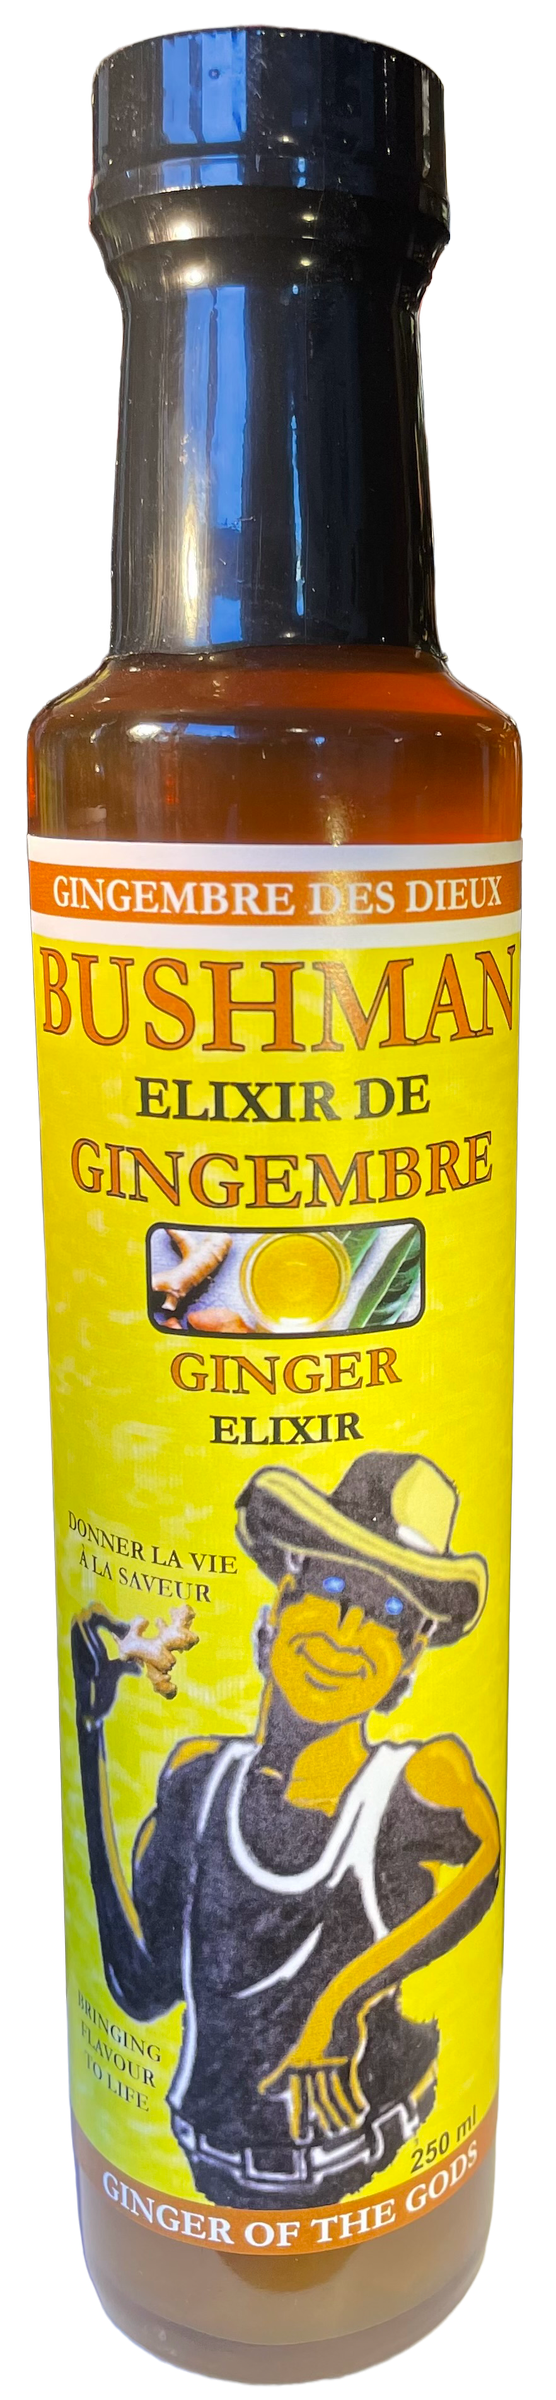 Bushman Ginger Elixir